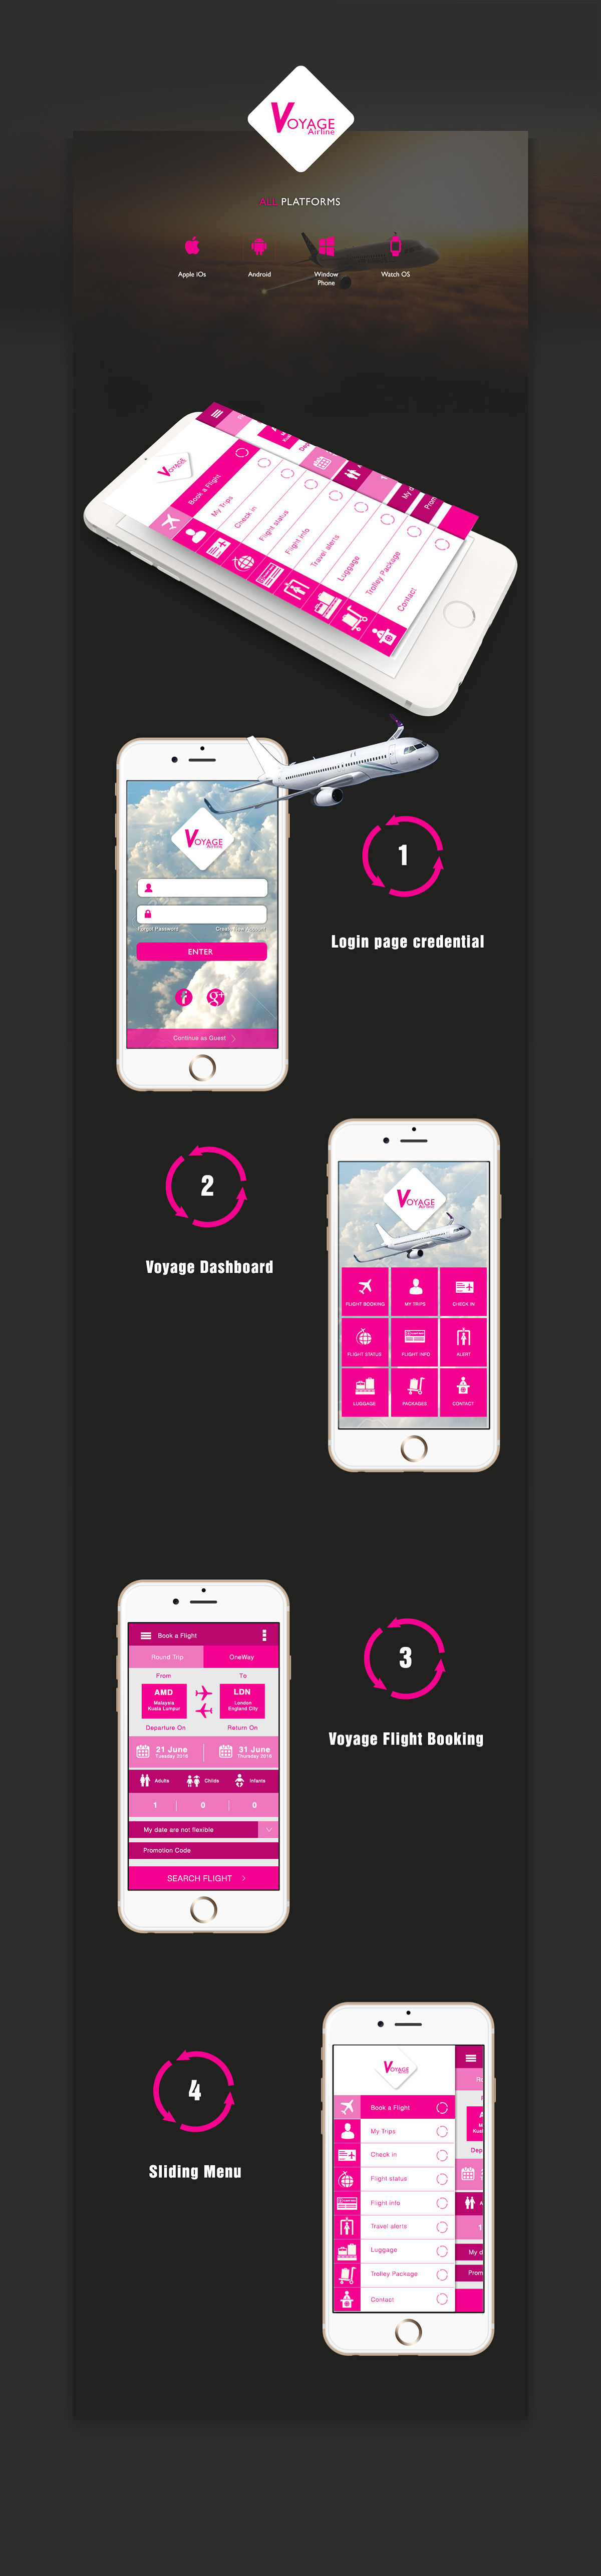 ux UI airline App Card Airline App Flight app booking flight app app design framer ui kit mobile ios Travel App voyage airline